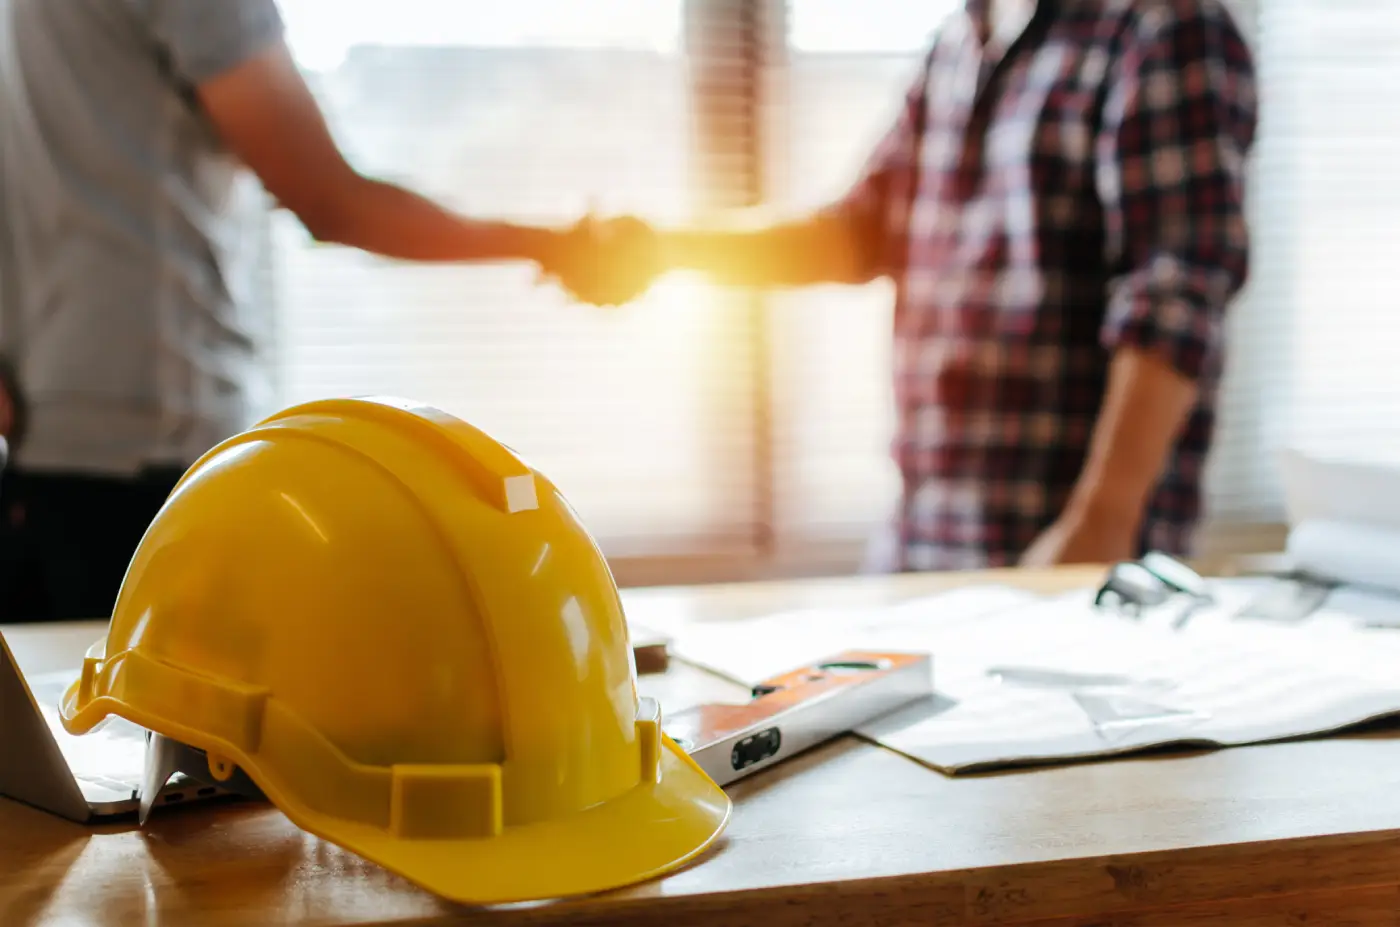 Construction project scene with handshake, hard hat, blueprints symbolizing cooperation